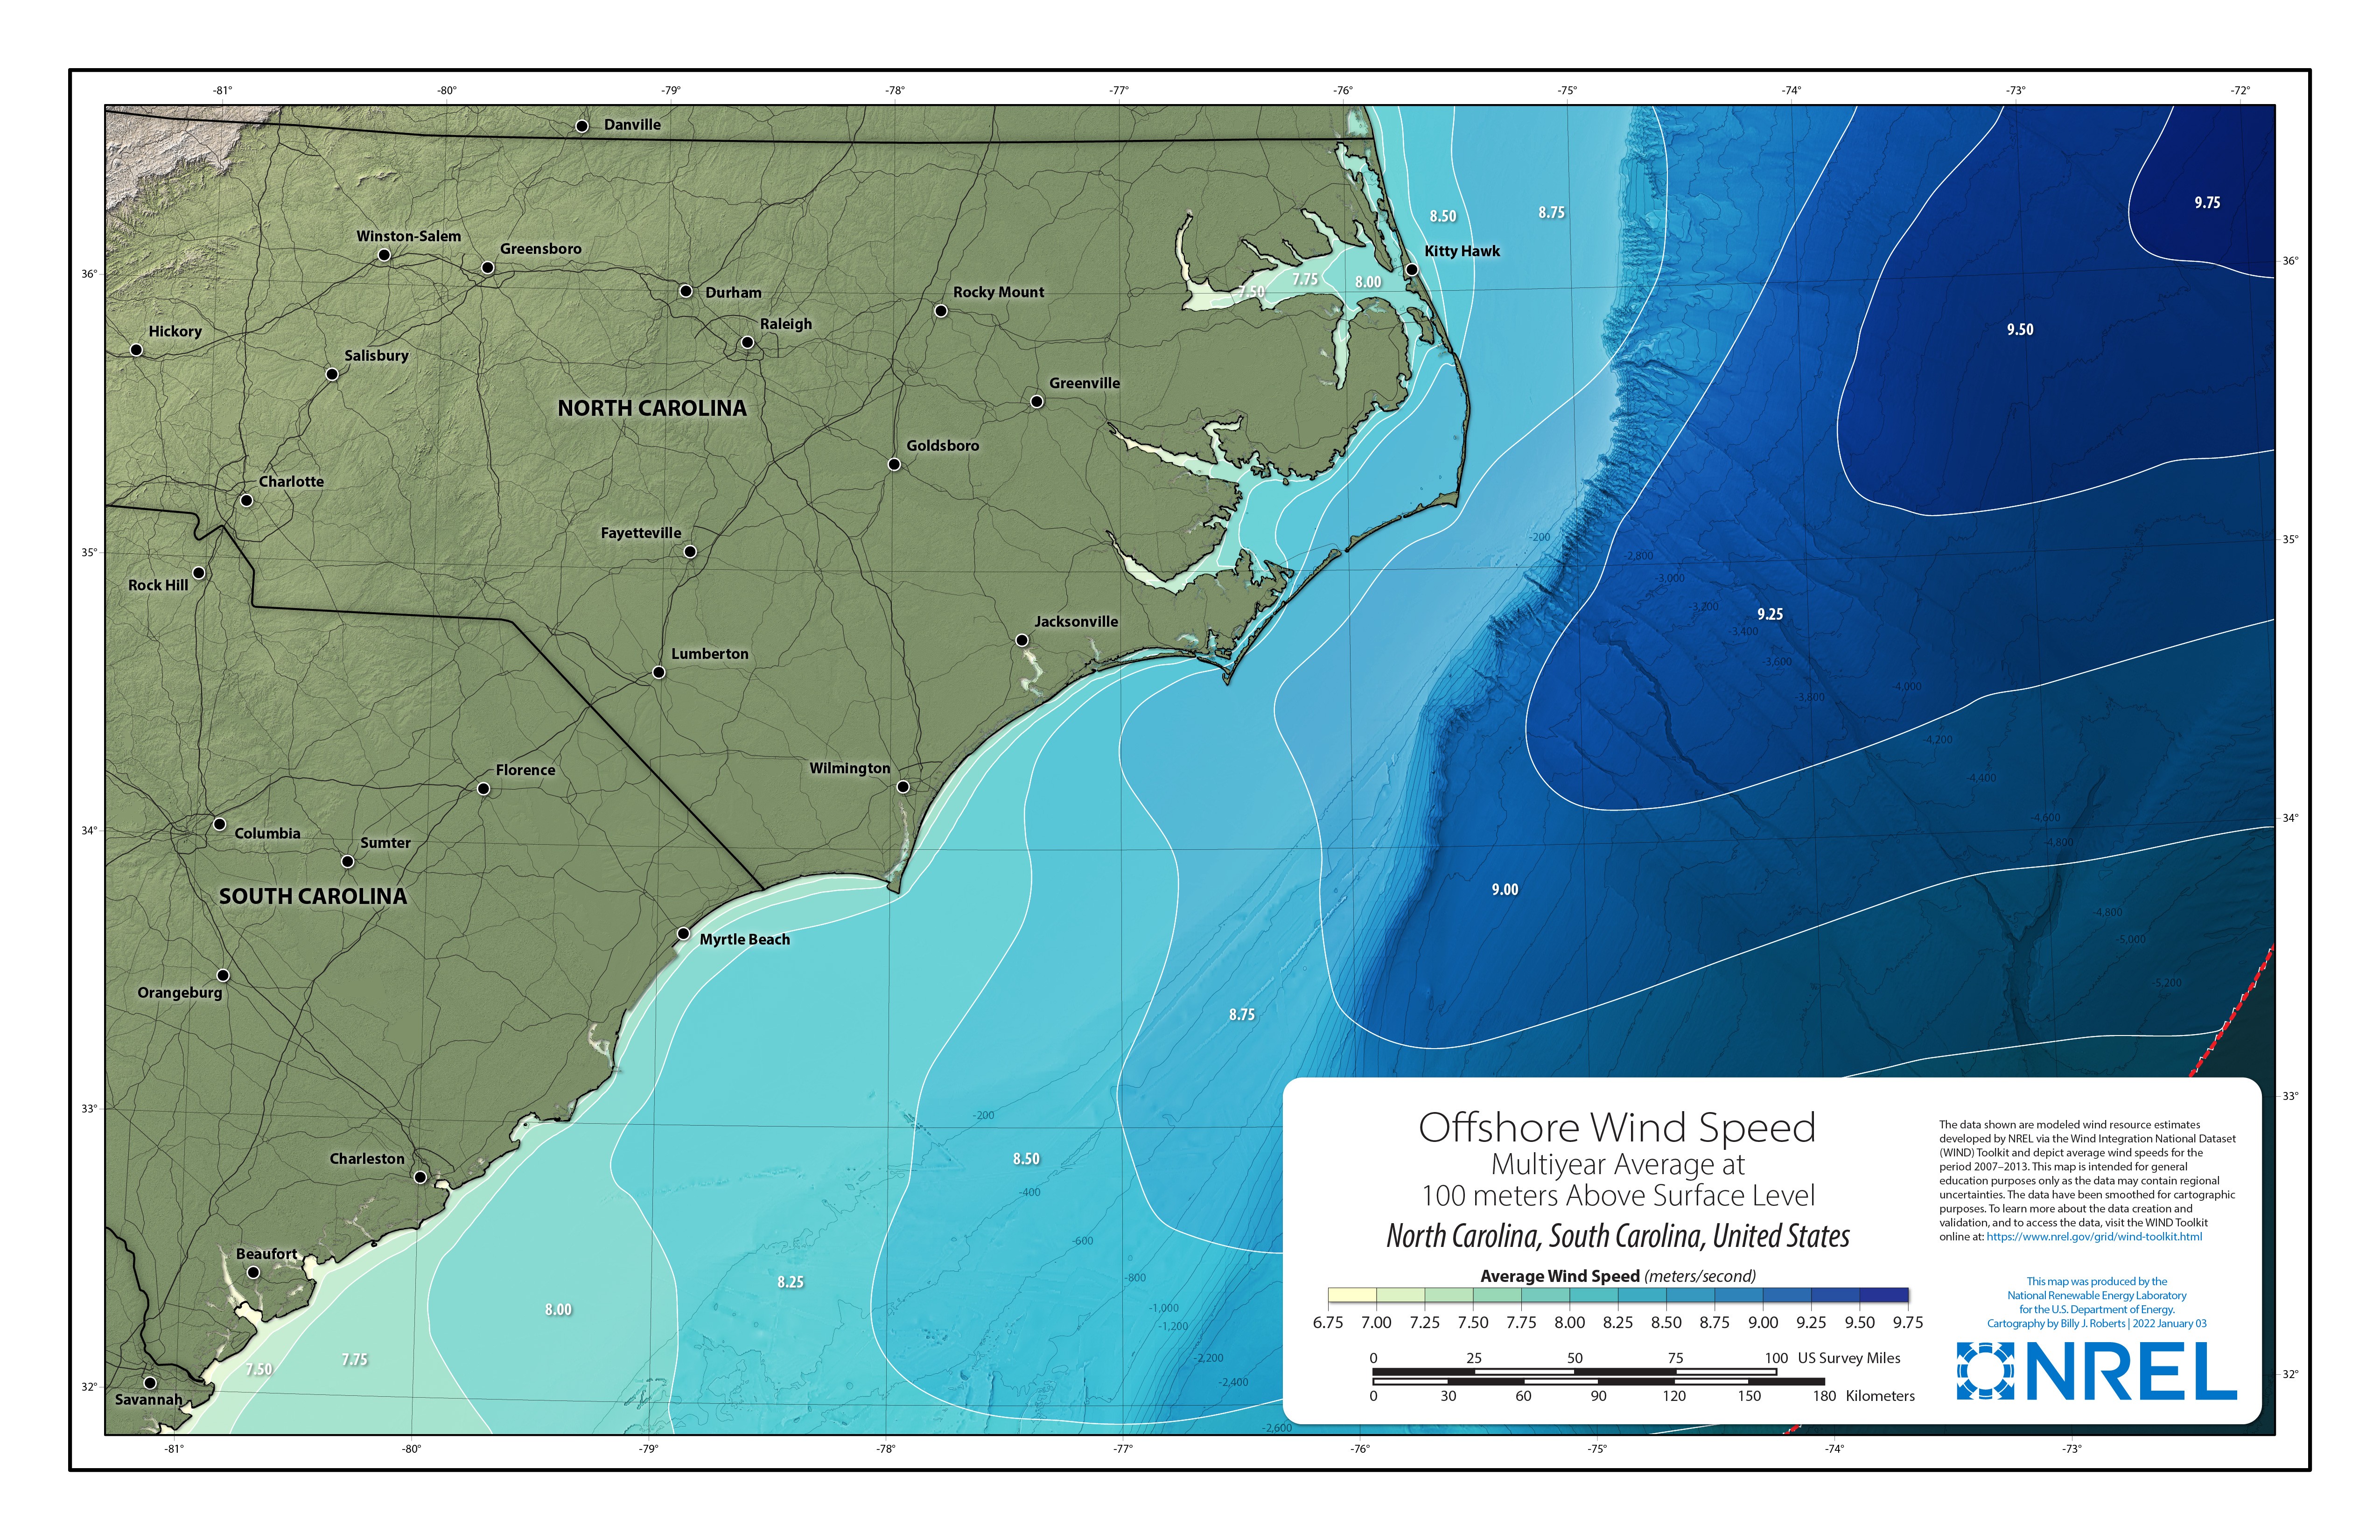 North Carolina-South Carolina Offshore Wind Speed at 100 Meters